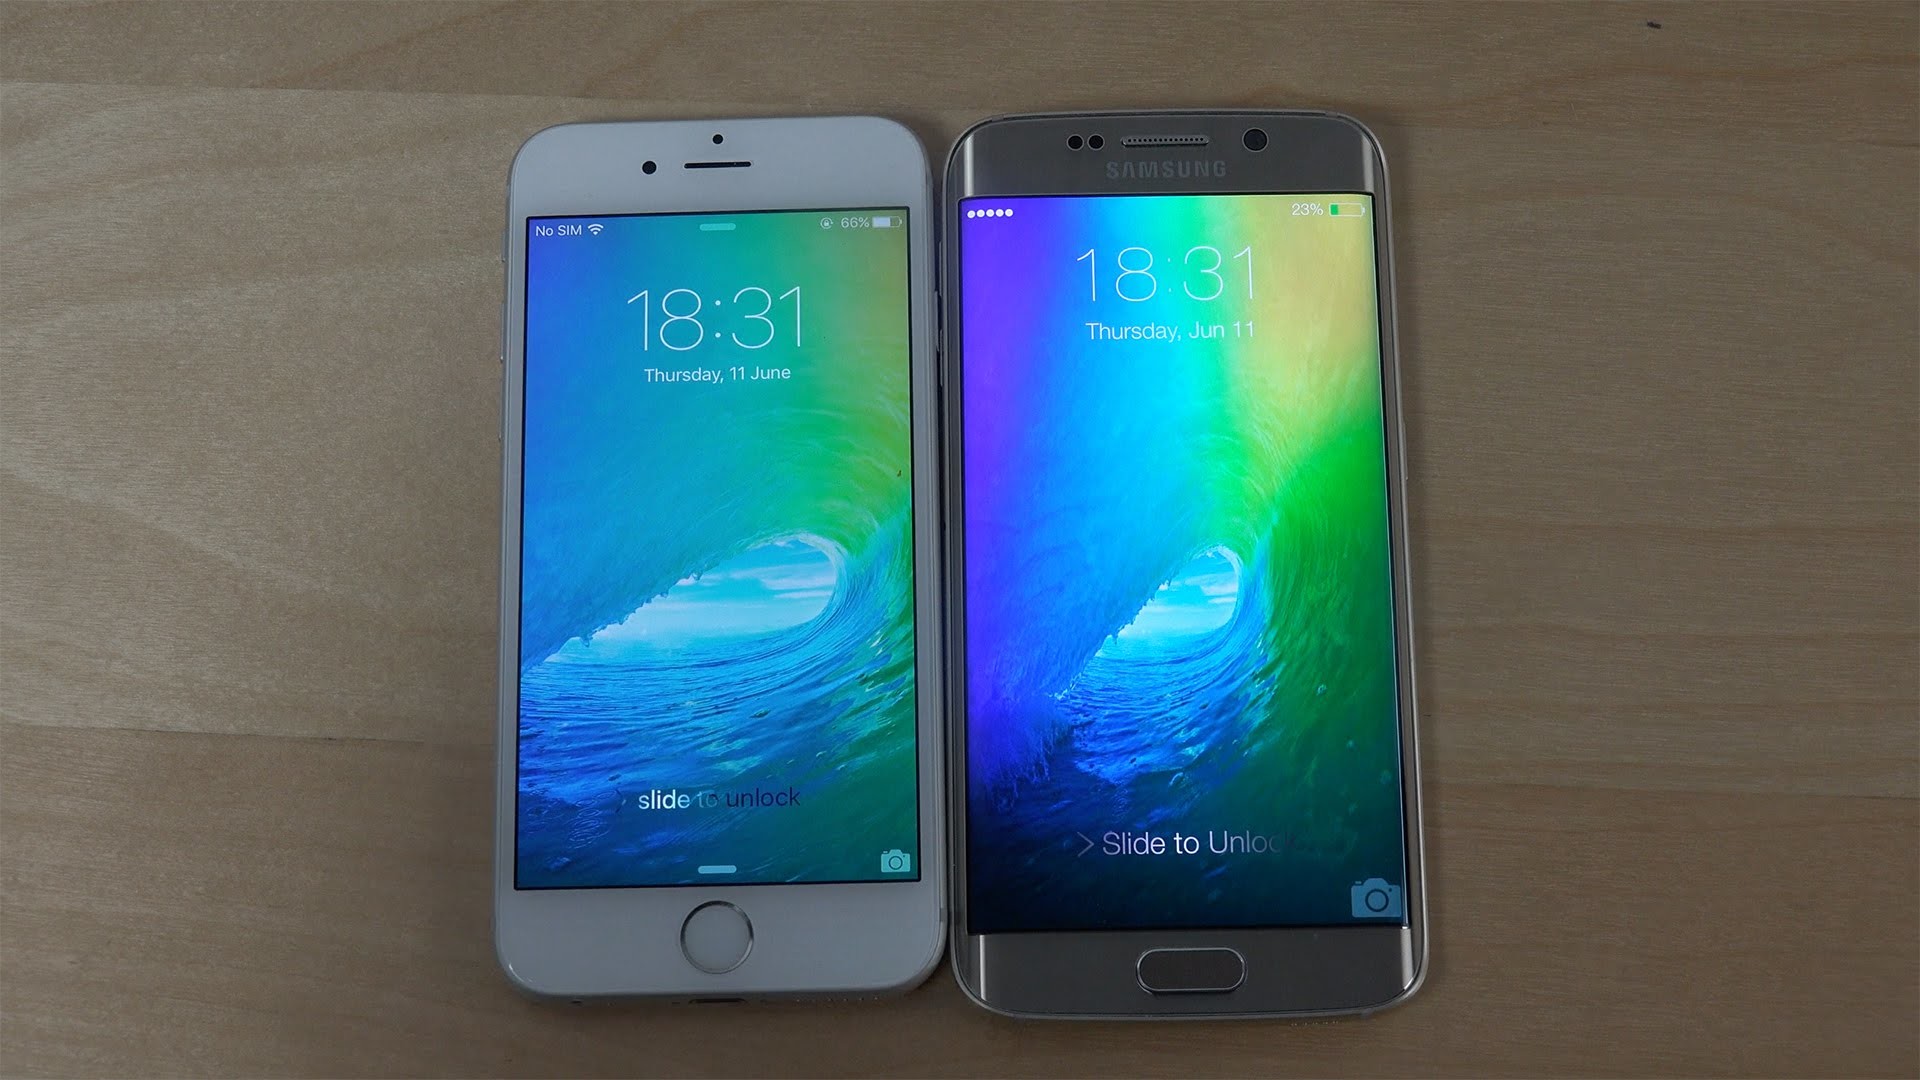 1920x1080 Samsung Galaxy S6 Edge iOS 9 Lock Screen App First Look Comparison! (4K) -  YouTube